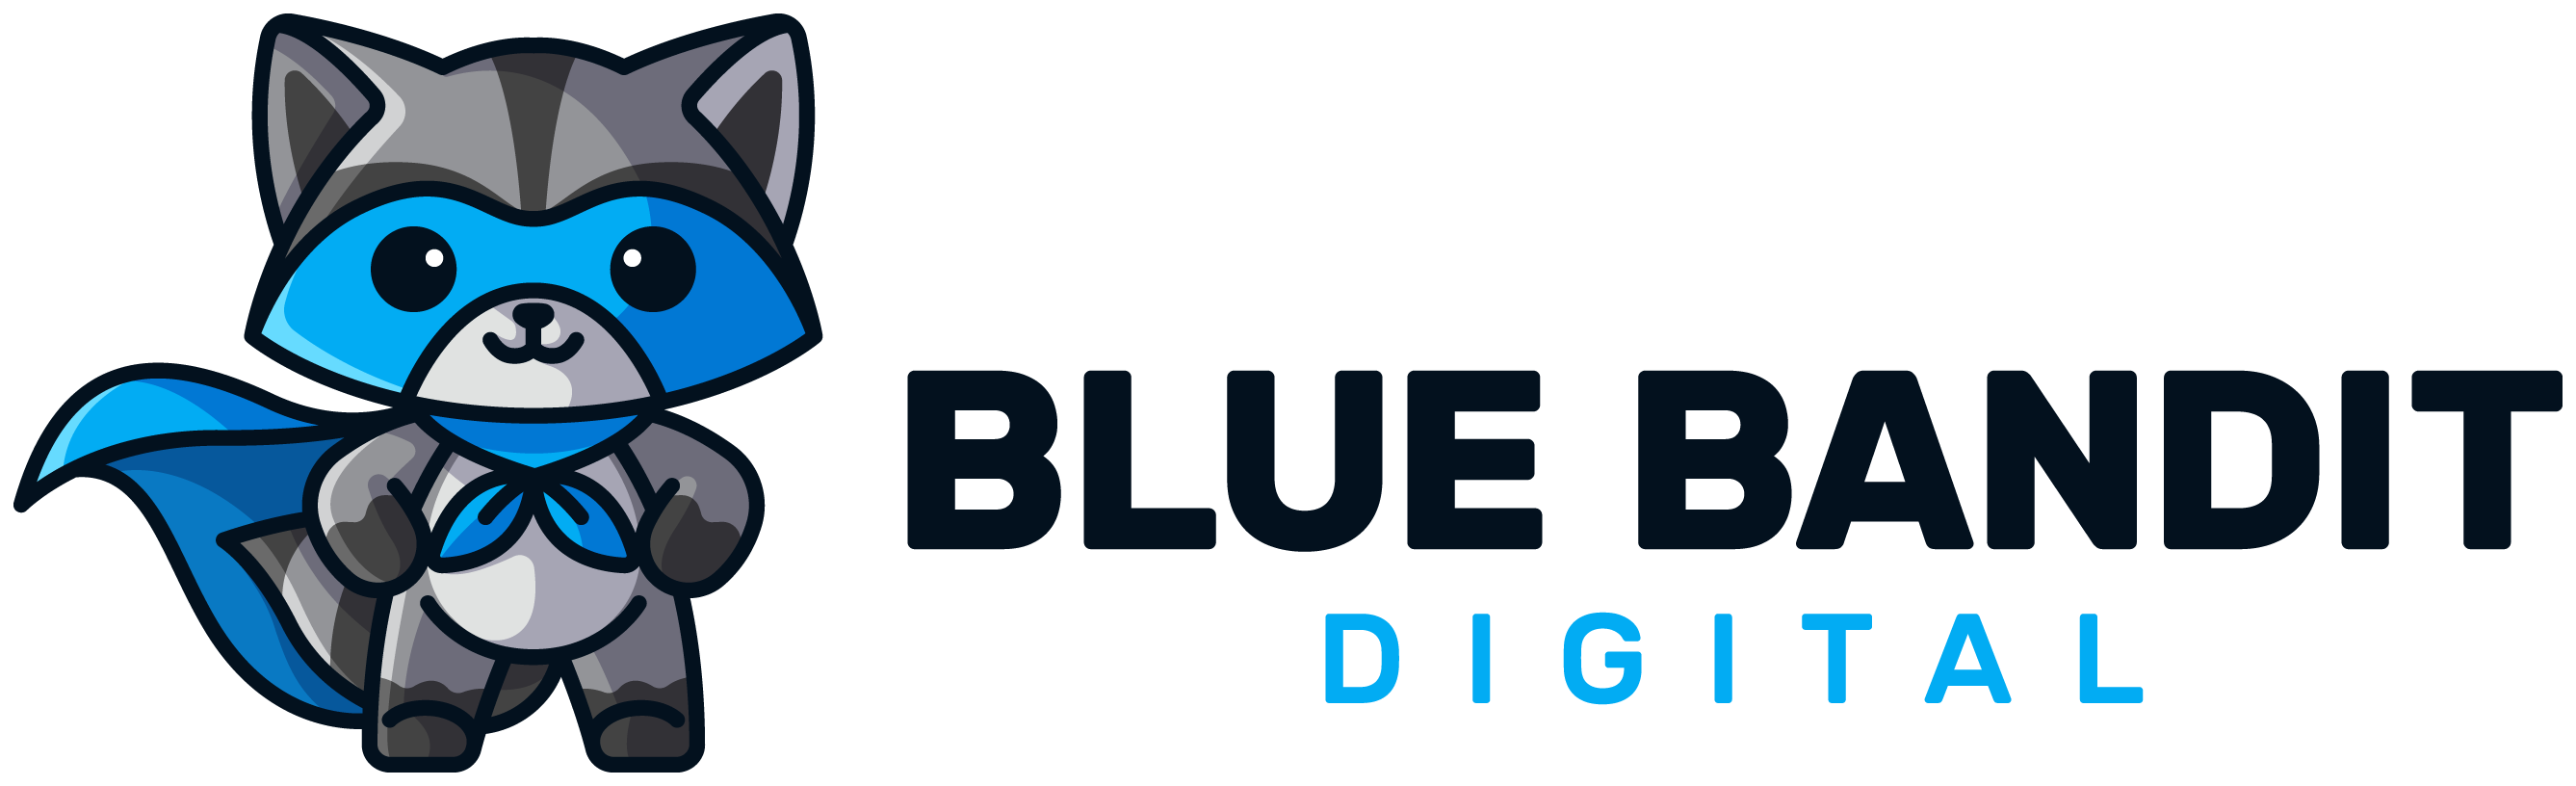 Blue Bandit Digital